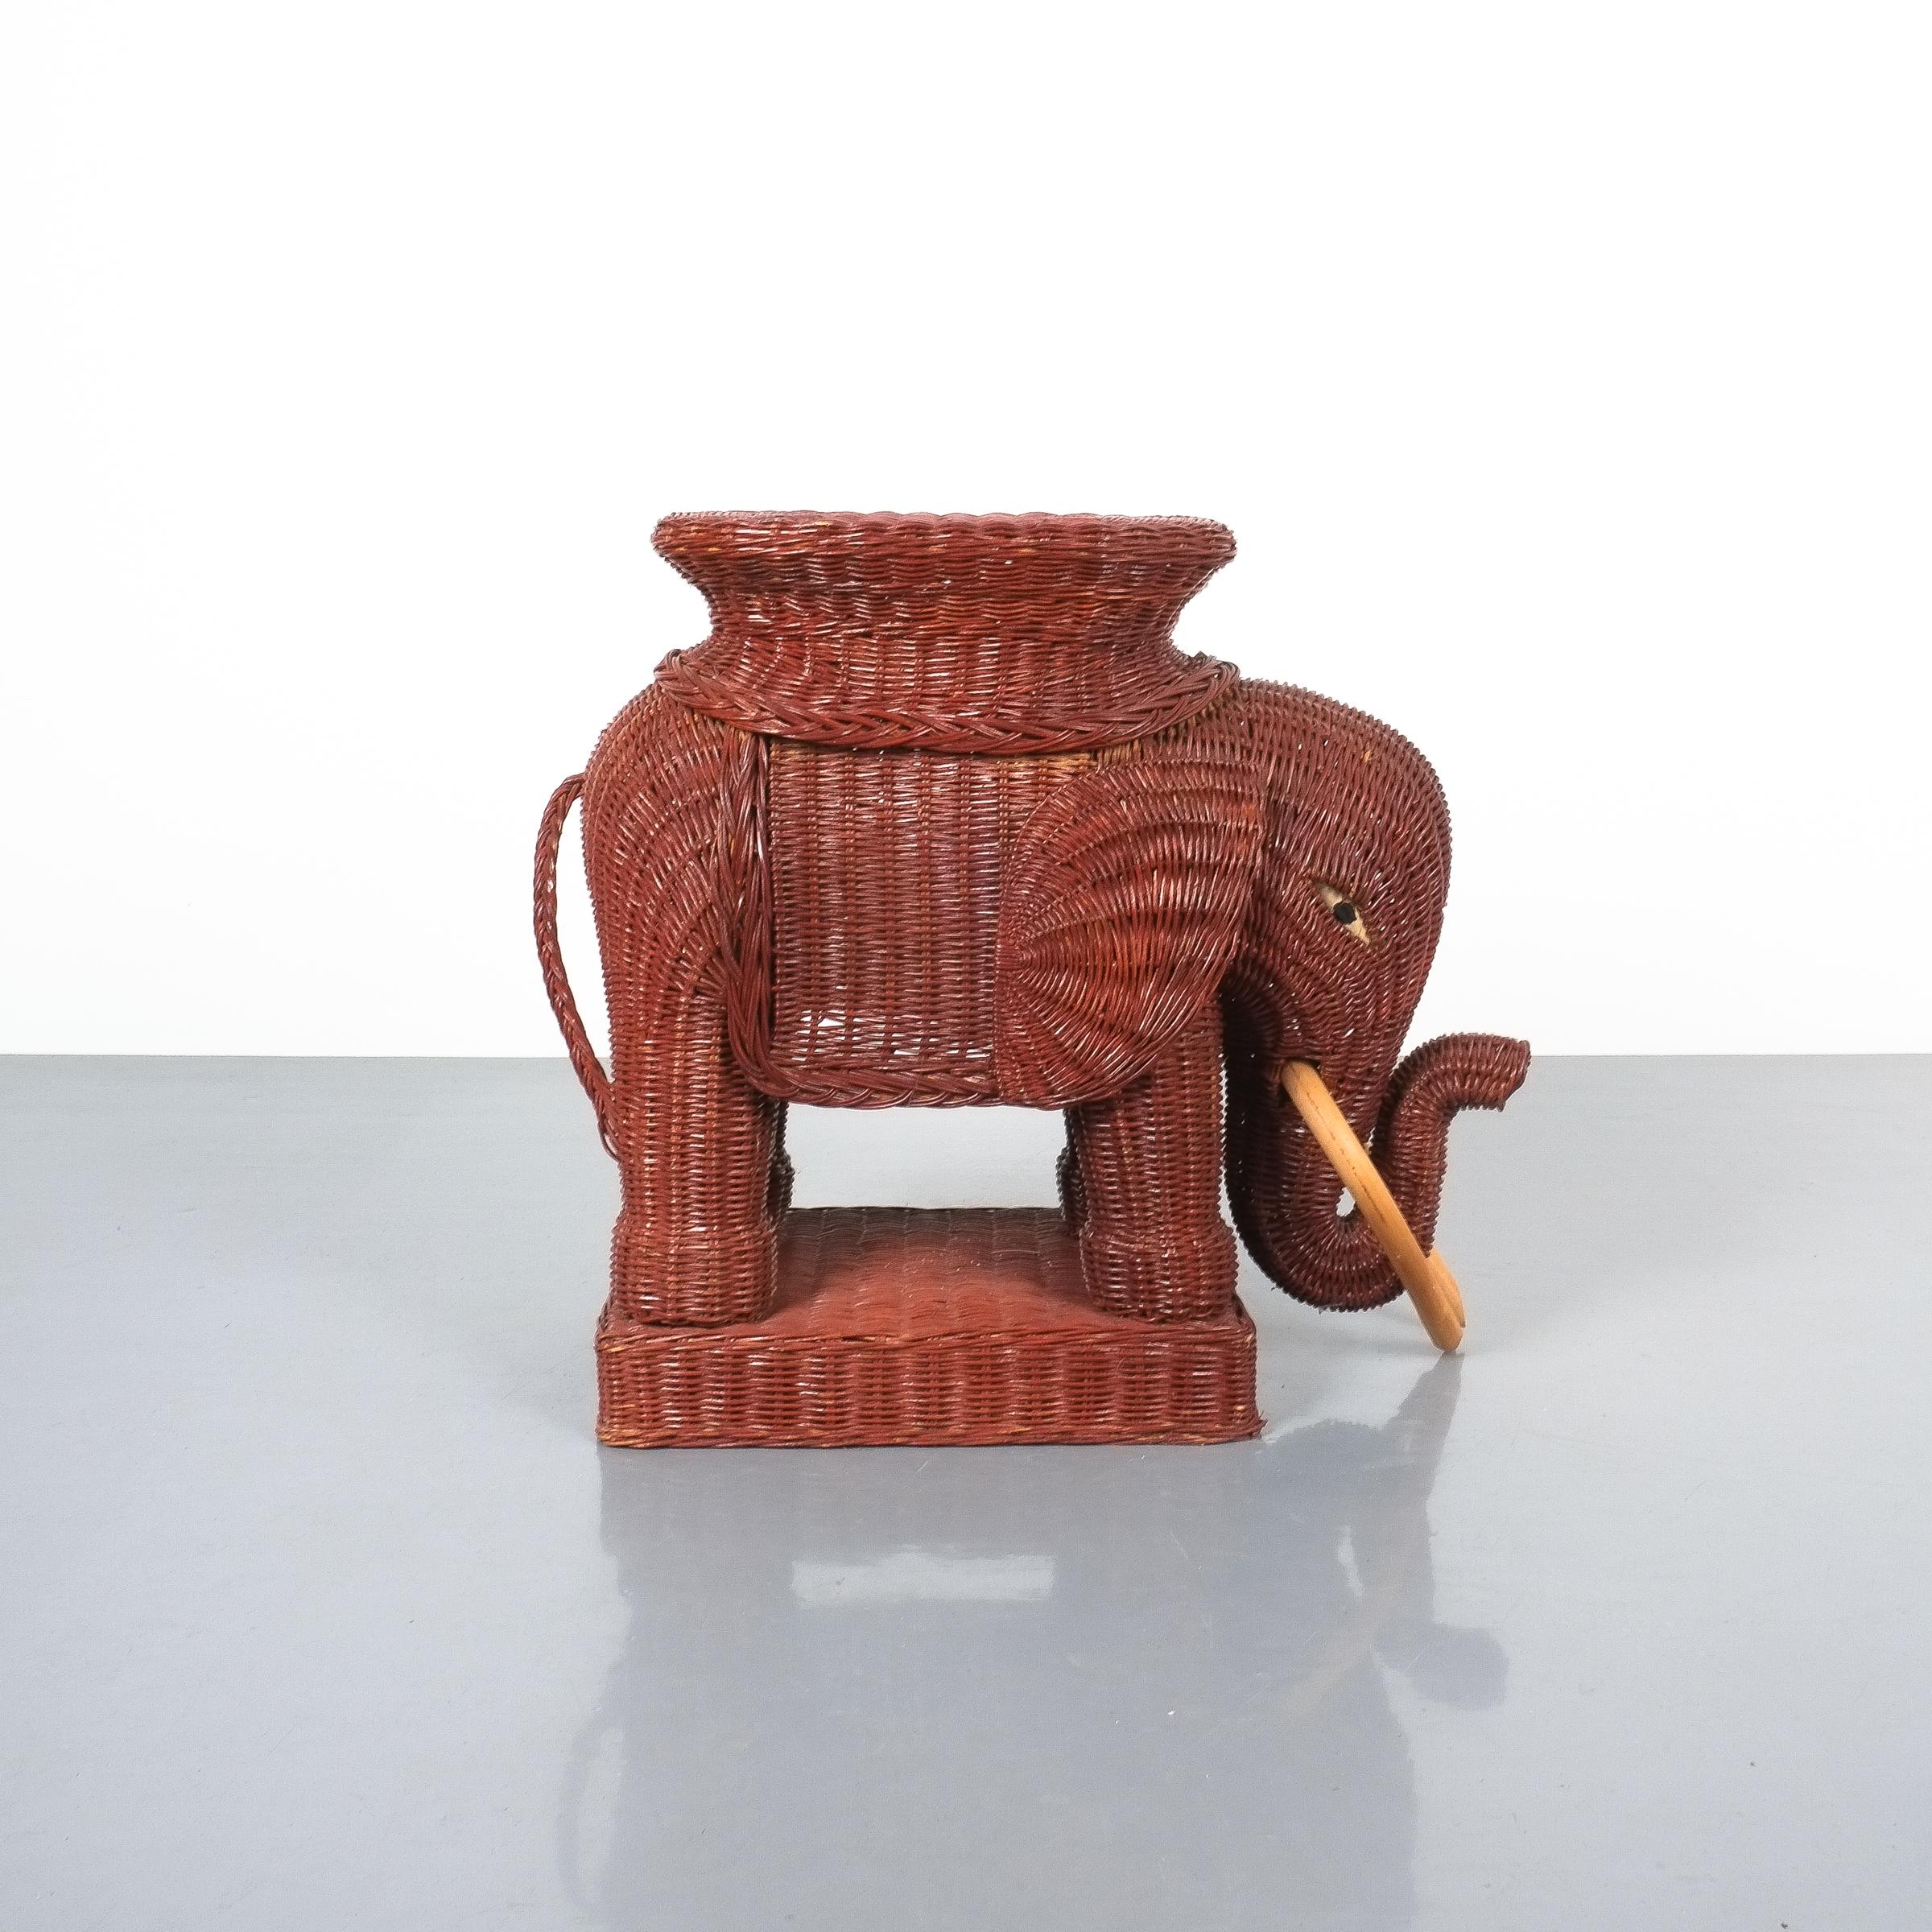 Belgian Midcentury Wicker Elephant Side Table or Flower Pot Stand